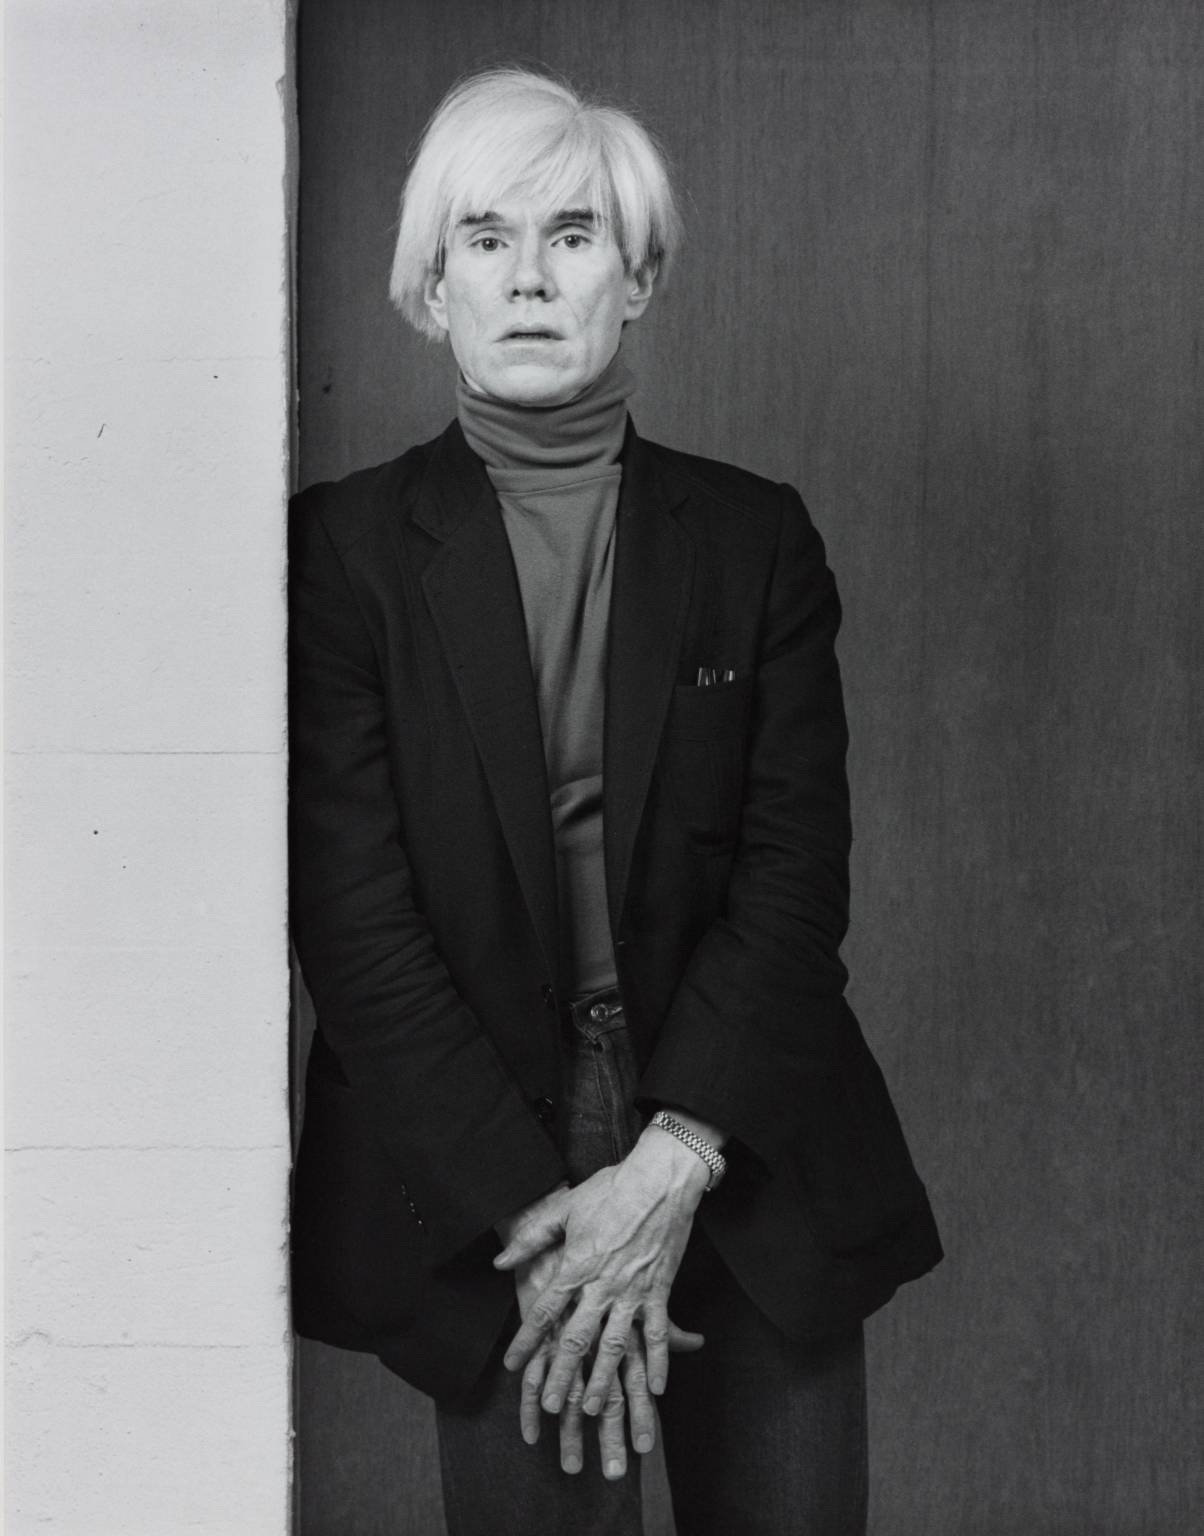 Andy Warhol HD wallpapers, Desktop wallpaper - most viewed